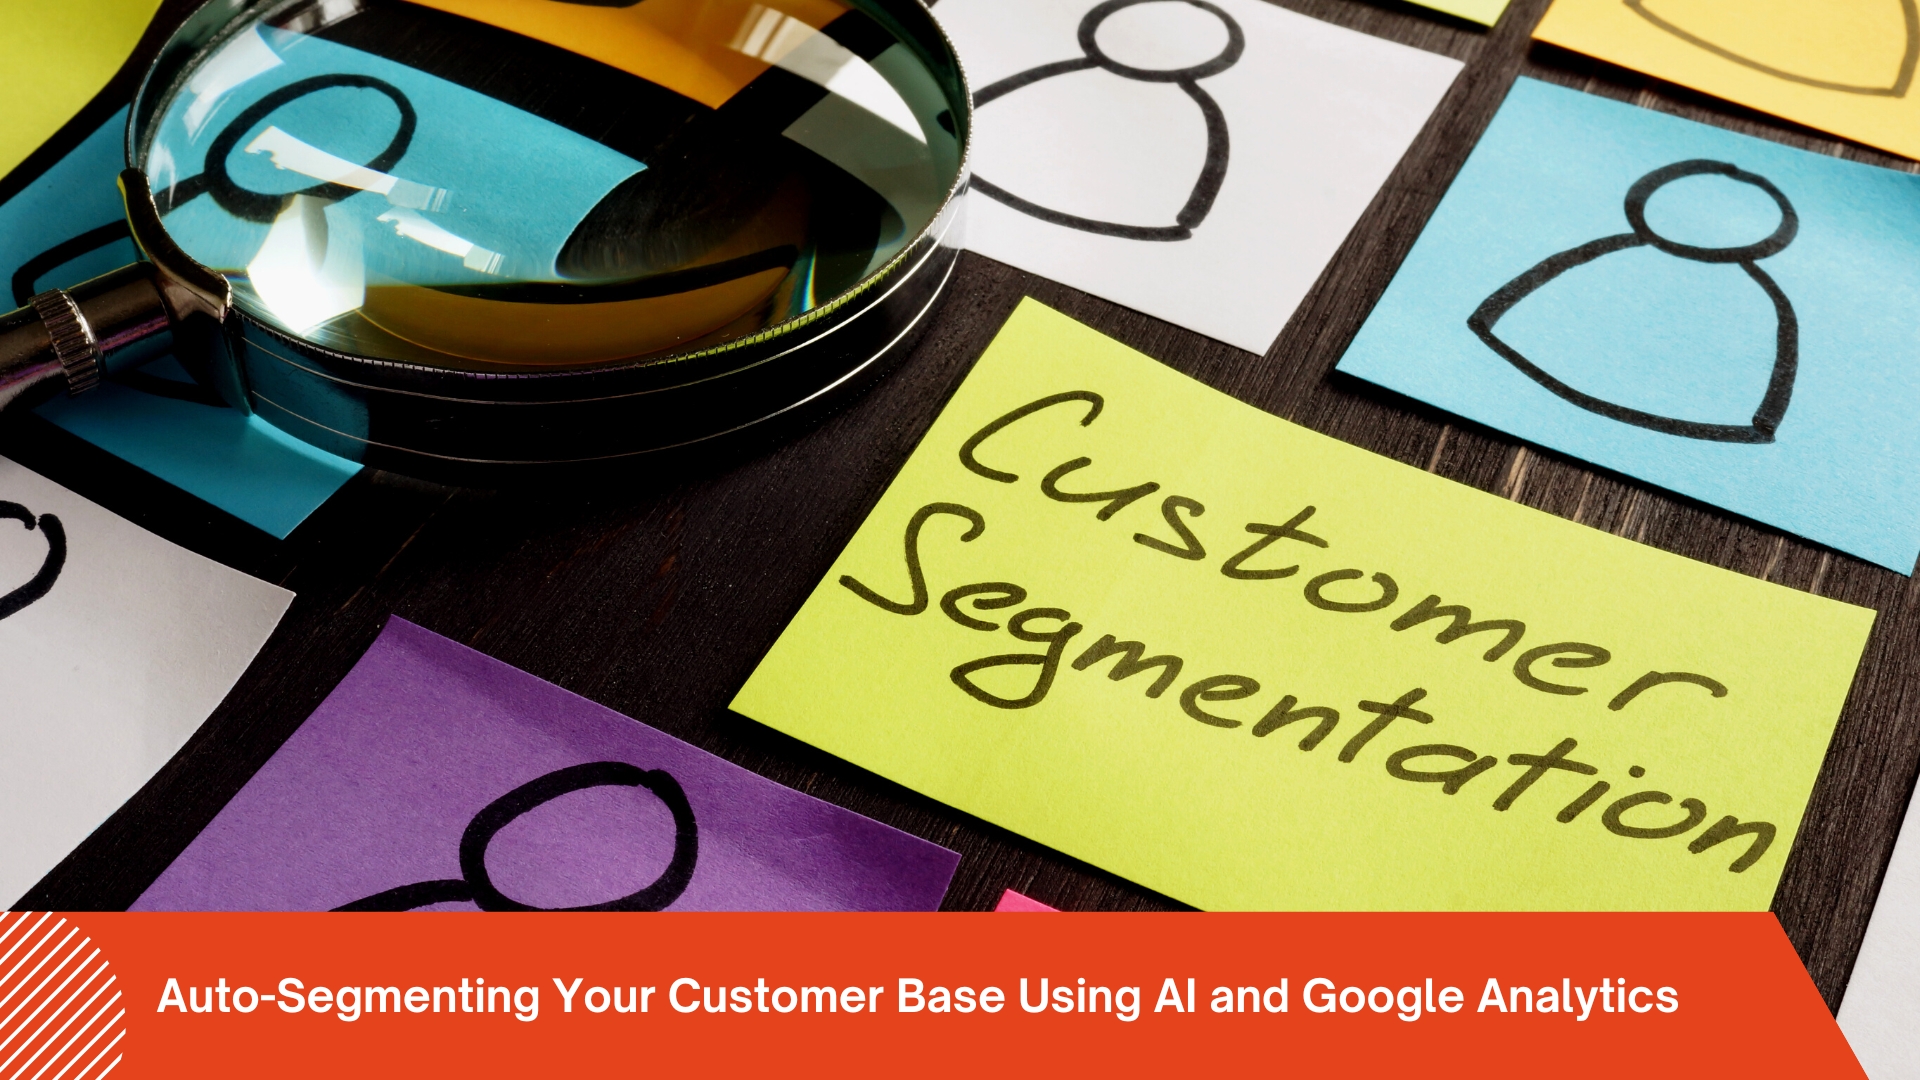 Auto-Segmenting Your Customer Base Using AI and Google Analytics